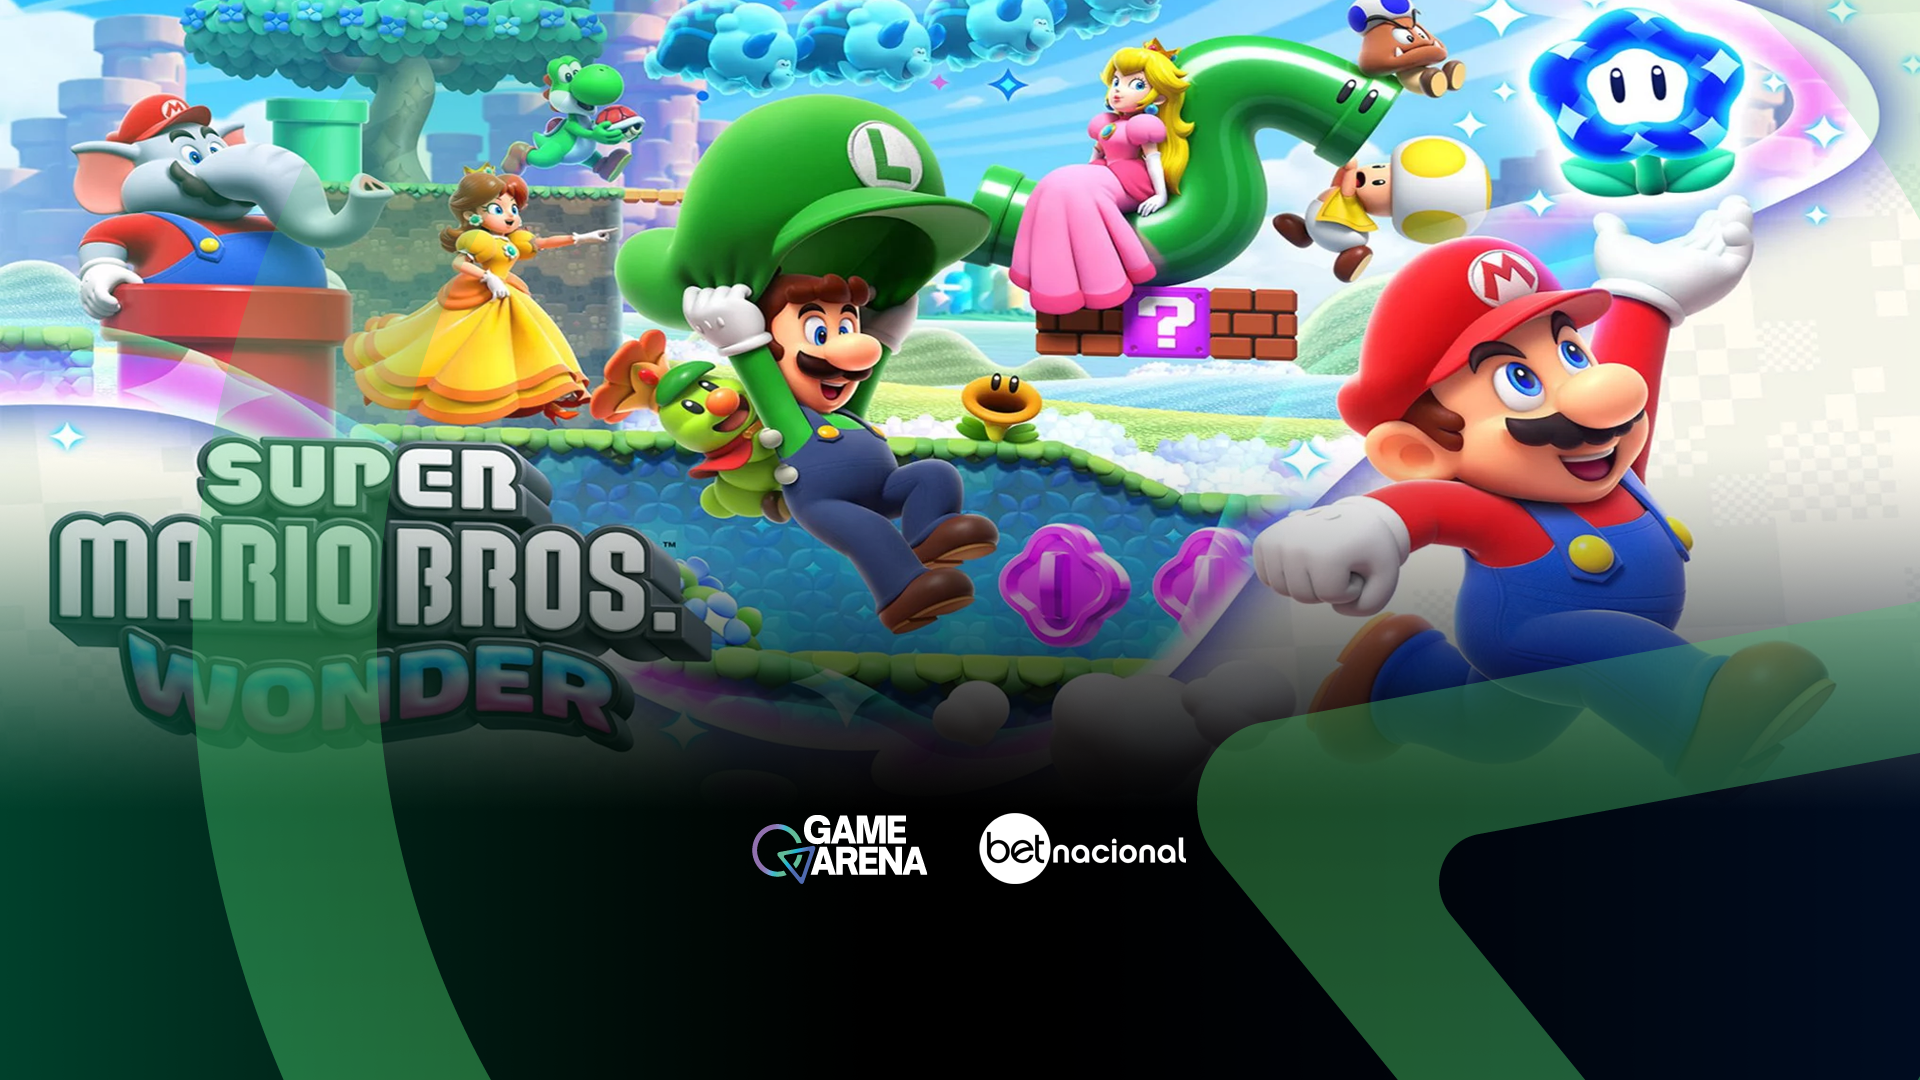 Super Mario Bros. Wonder - Meus Jogos